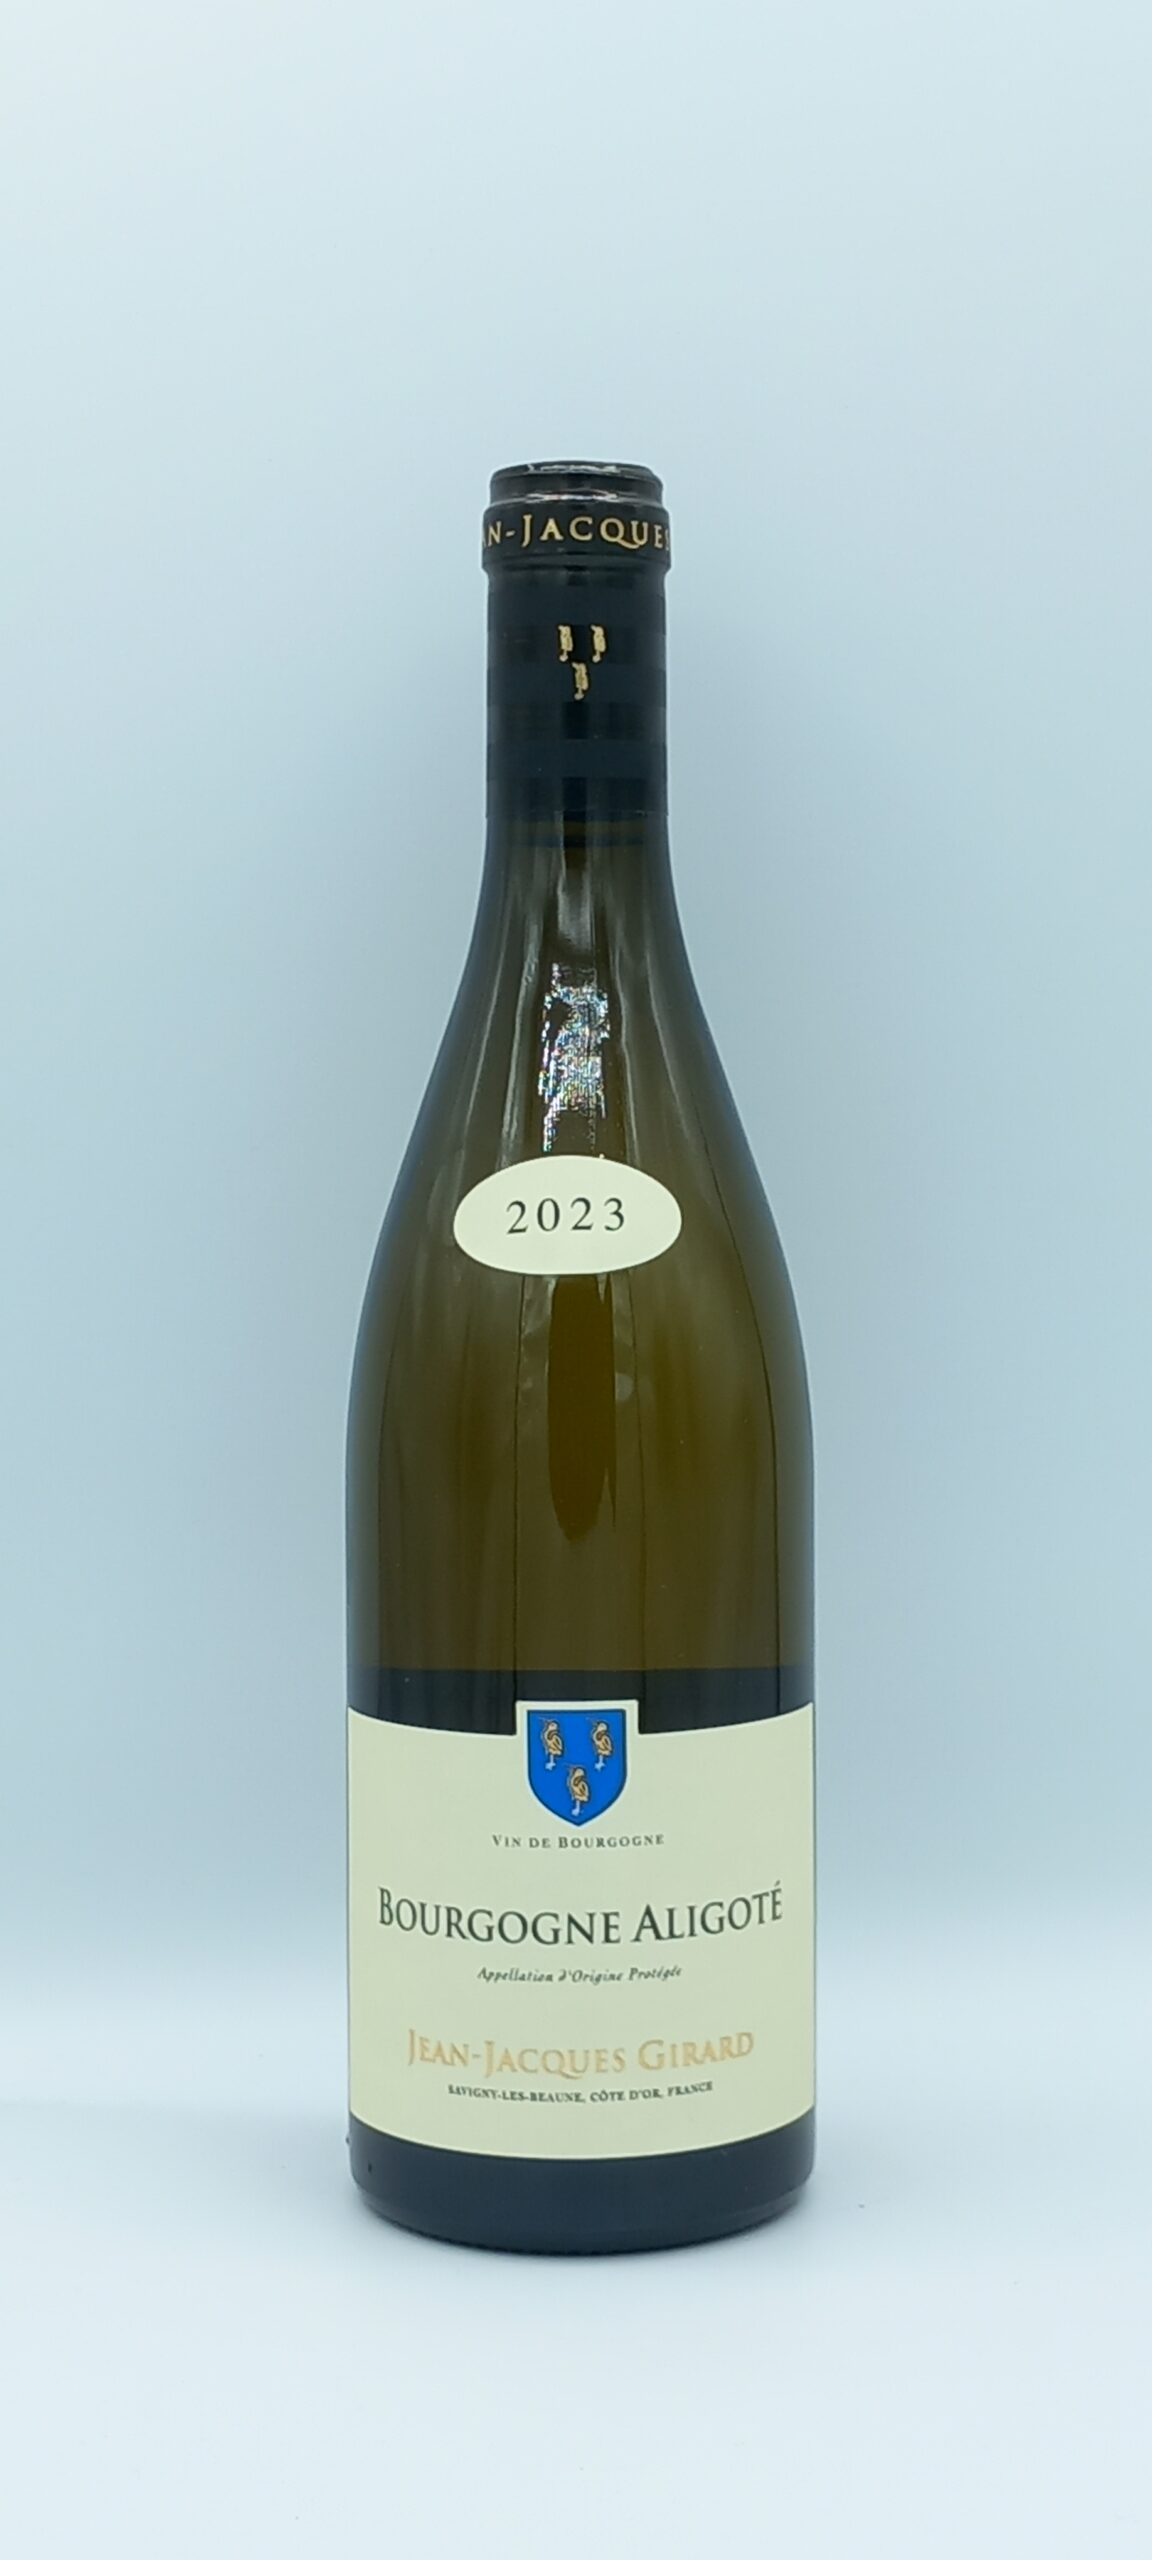 Bourgogne Aligoté 2023 Domaine Jean-Jacques Girard